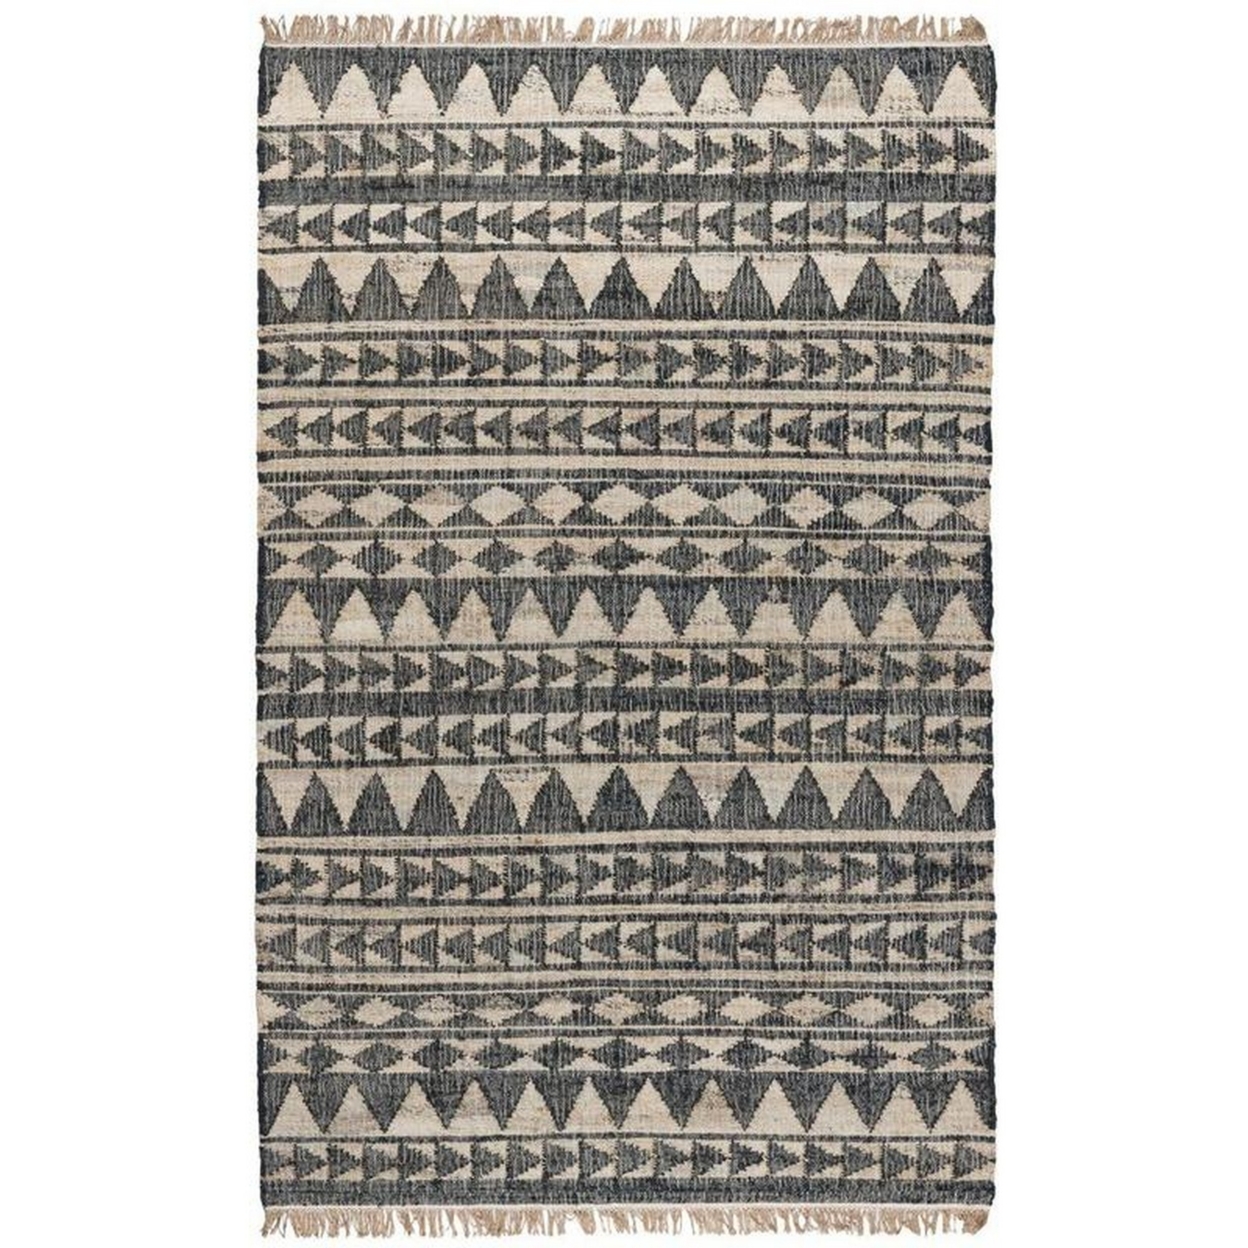 Moly 5 X 8 Tassel Area Rug, Tribal Triangle Pattern, Black Handwoven Jute - Saltoro Sherpi